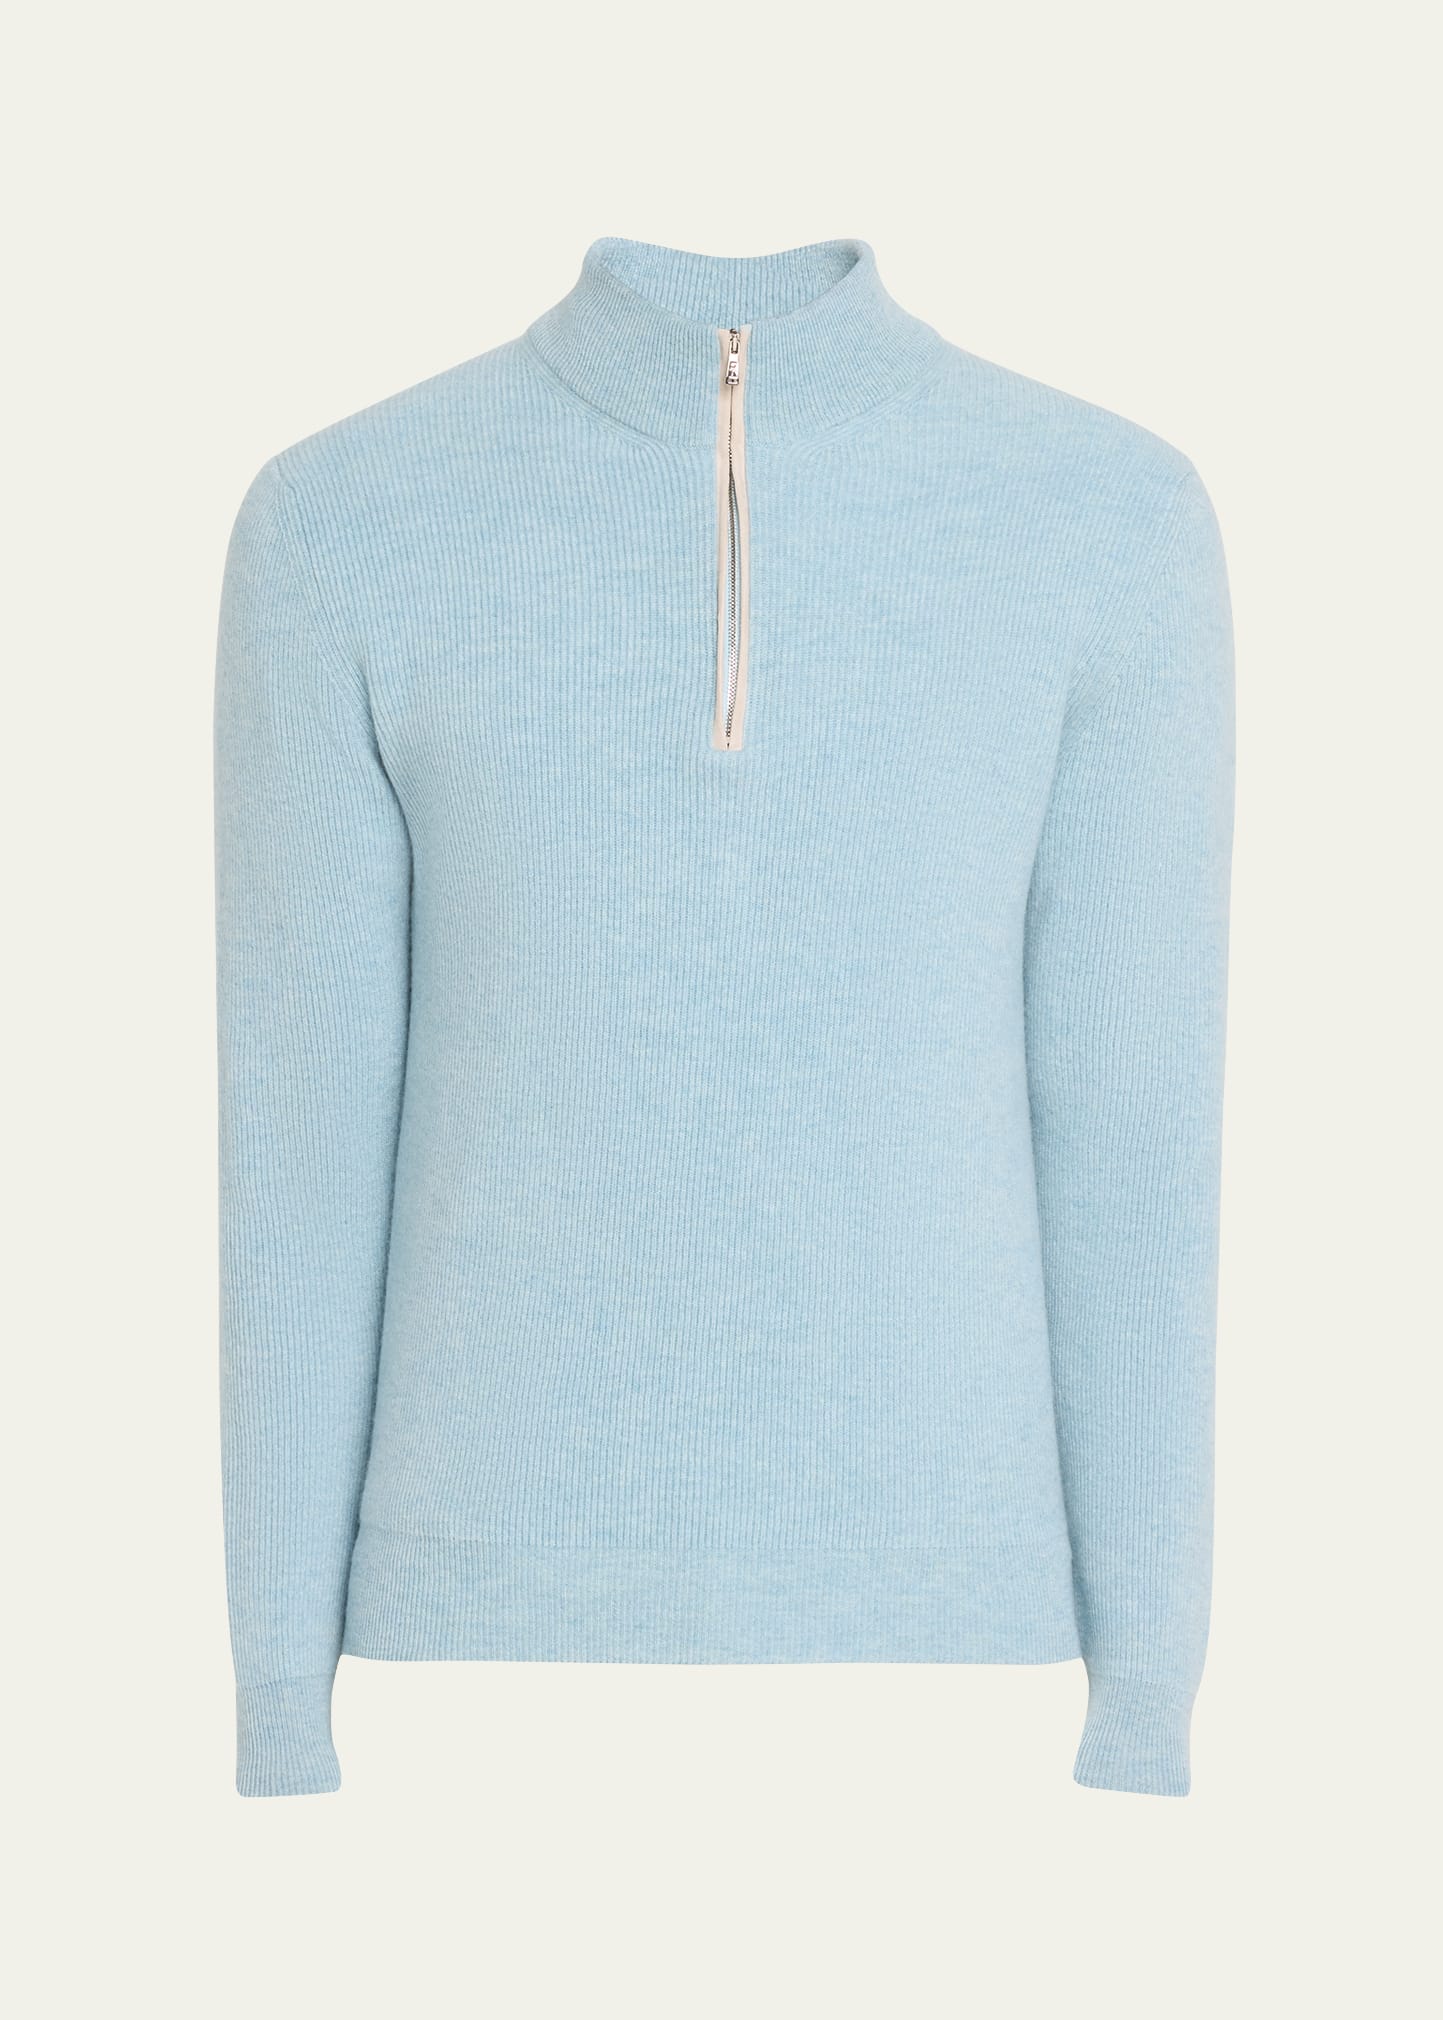 Men's Cashmere Rib Half-Zip Sweater